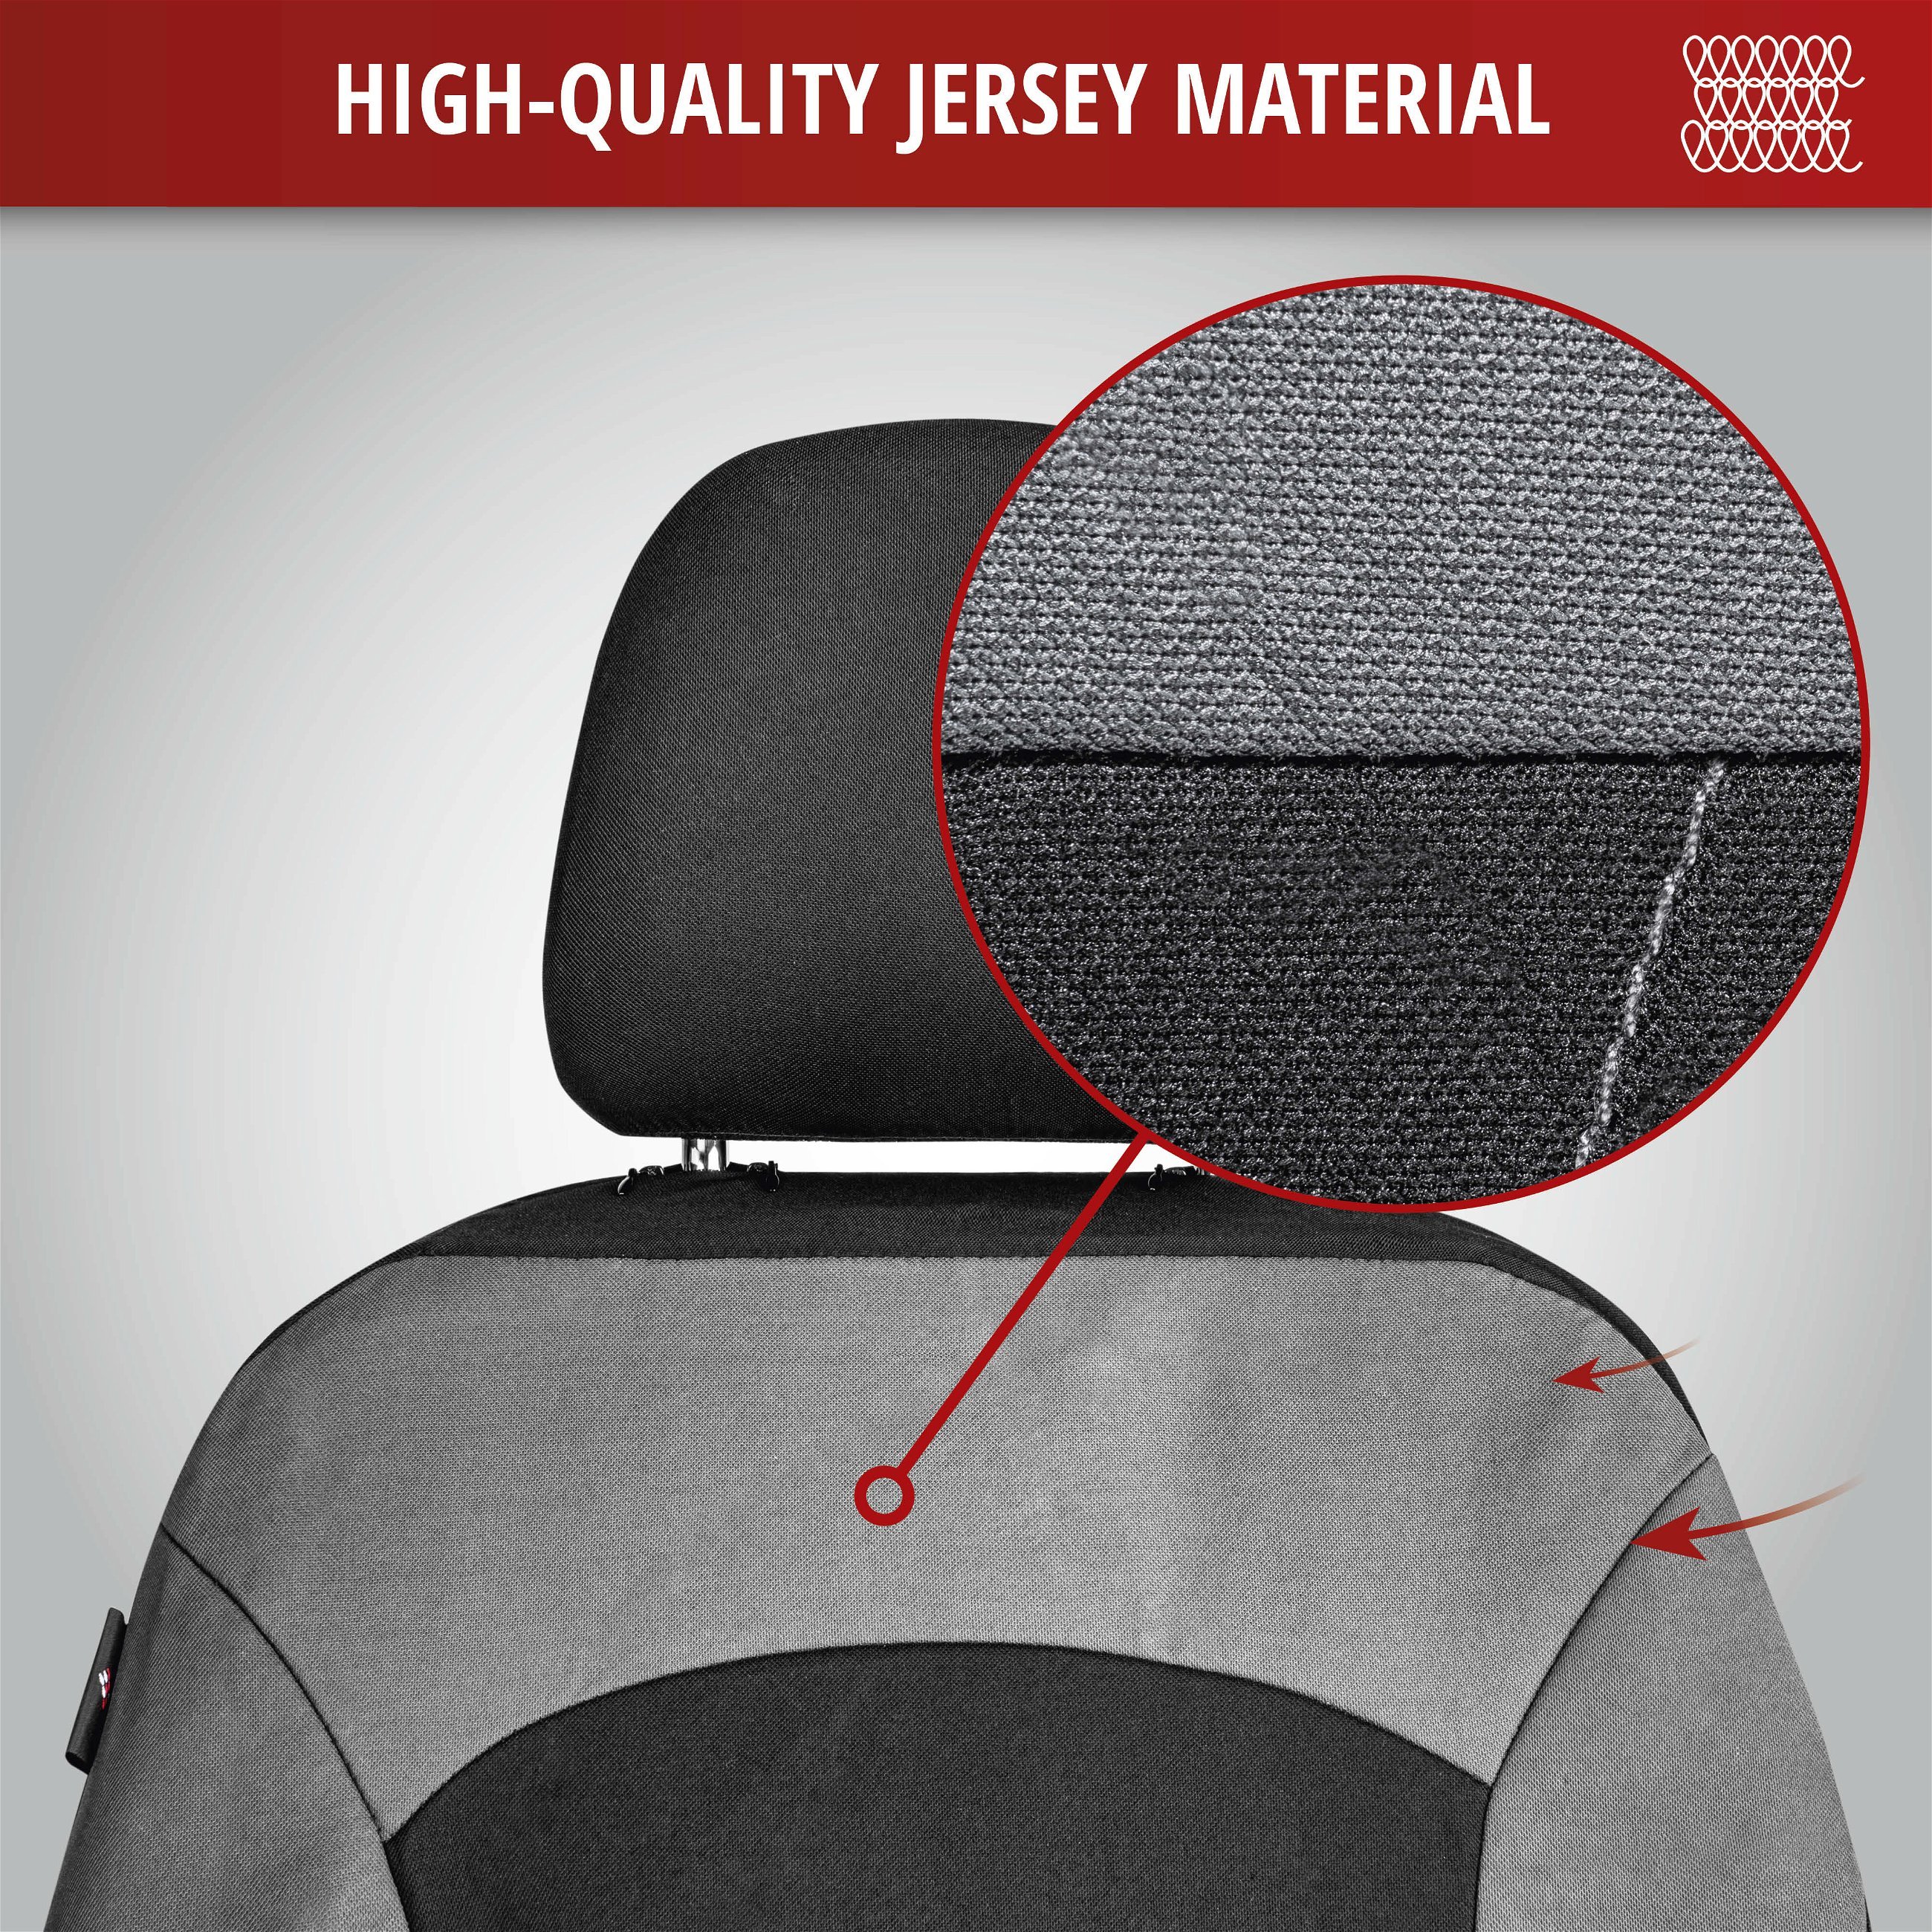 ZIPP IT Premium Inde Auto Seat cover with zipper system